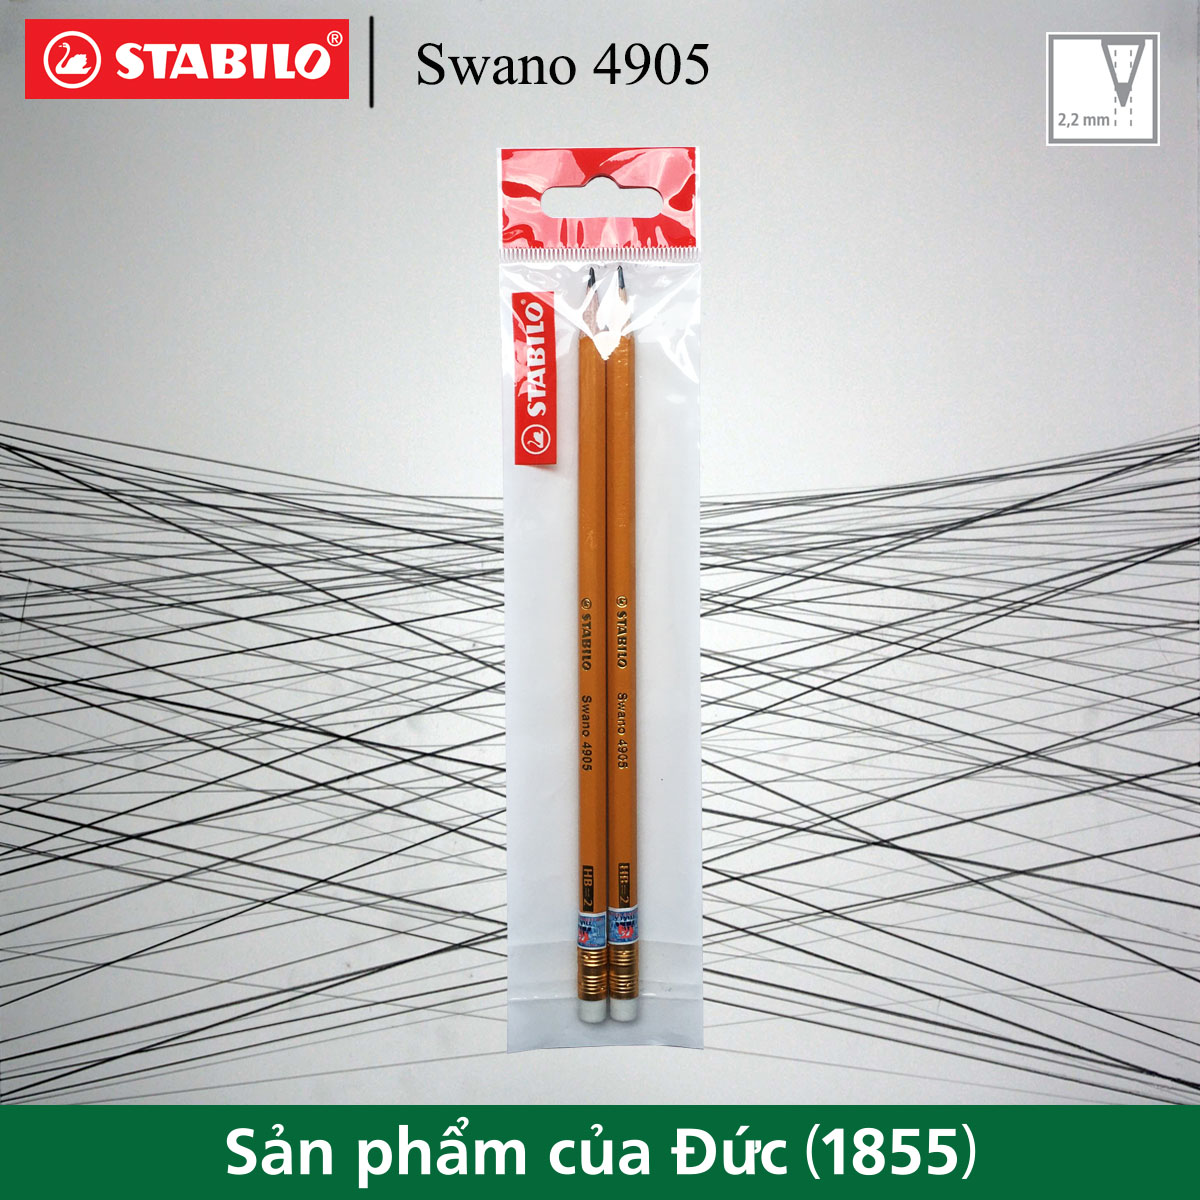 Bộ 2 Bút chì gỗ STABILO Swano 4905 HB